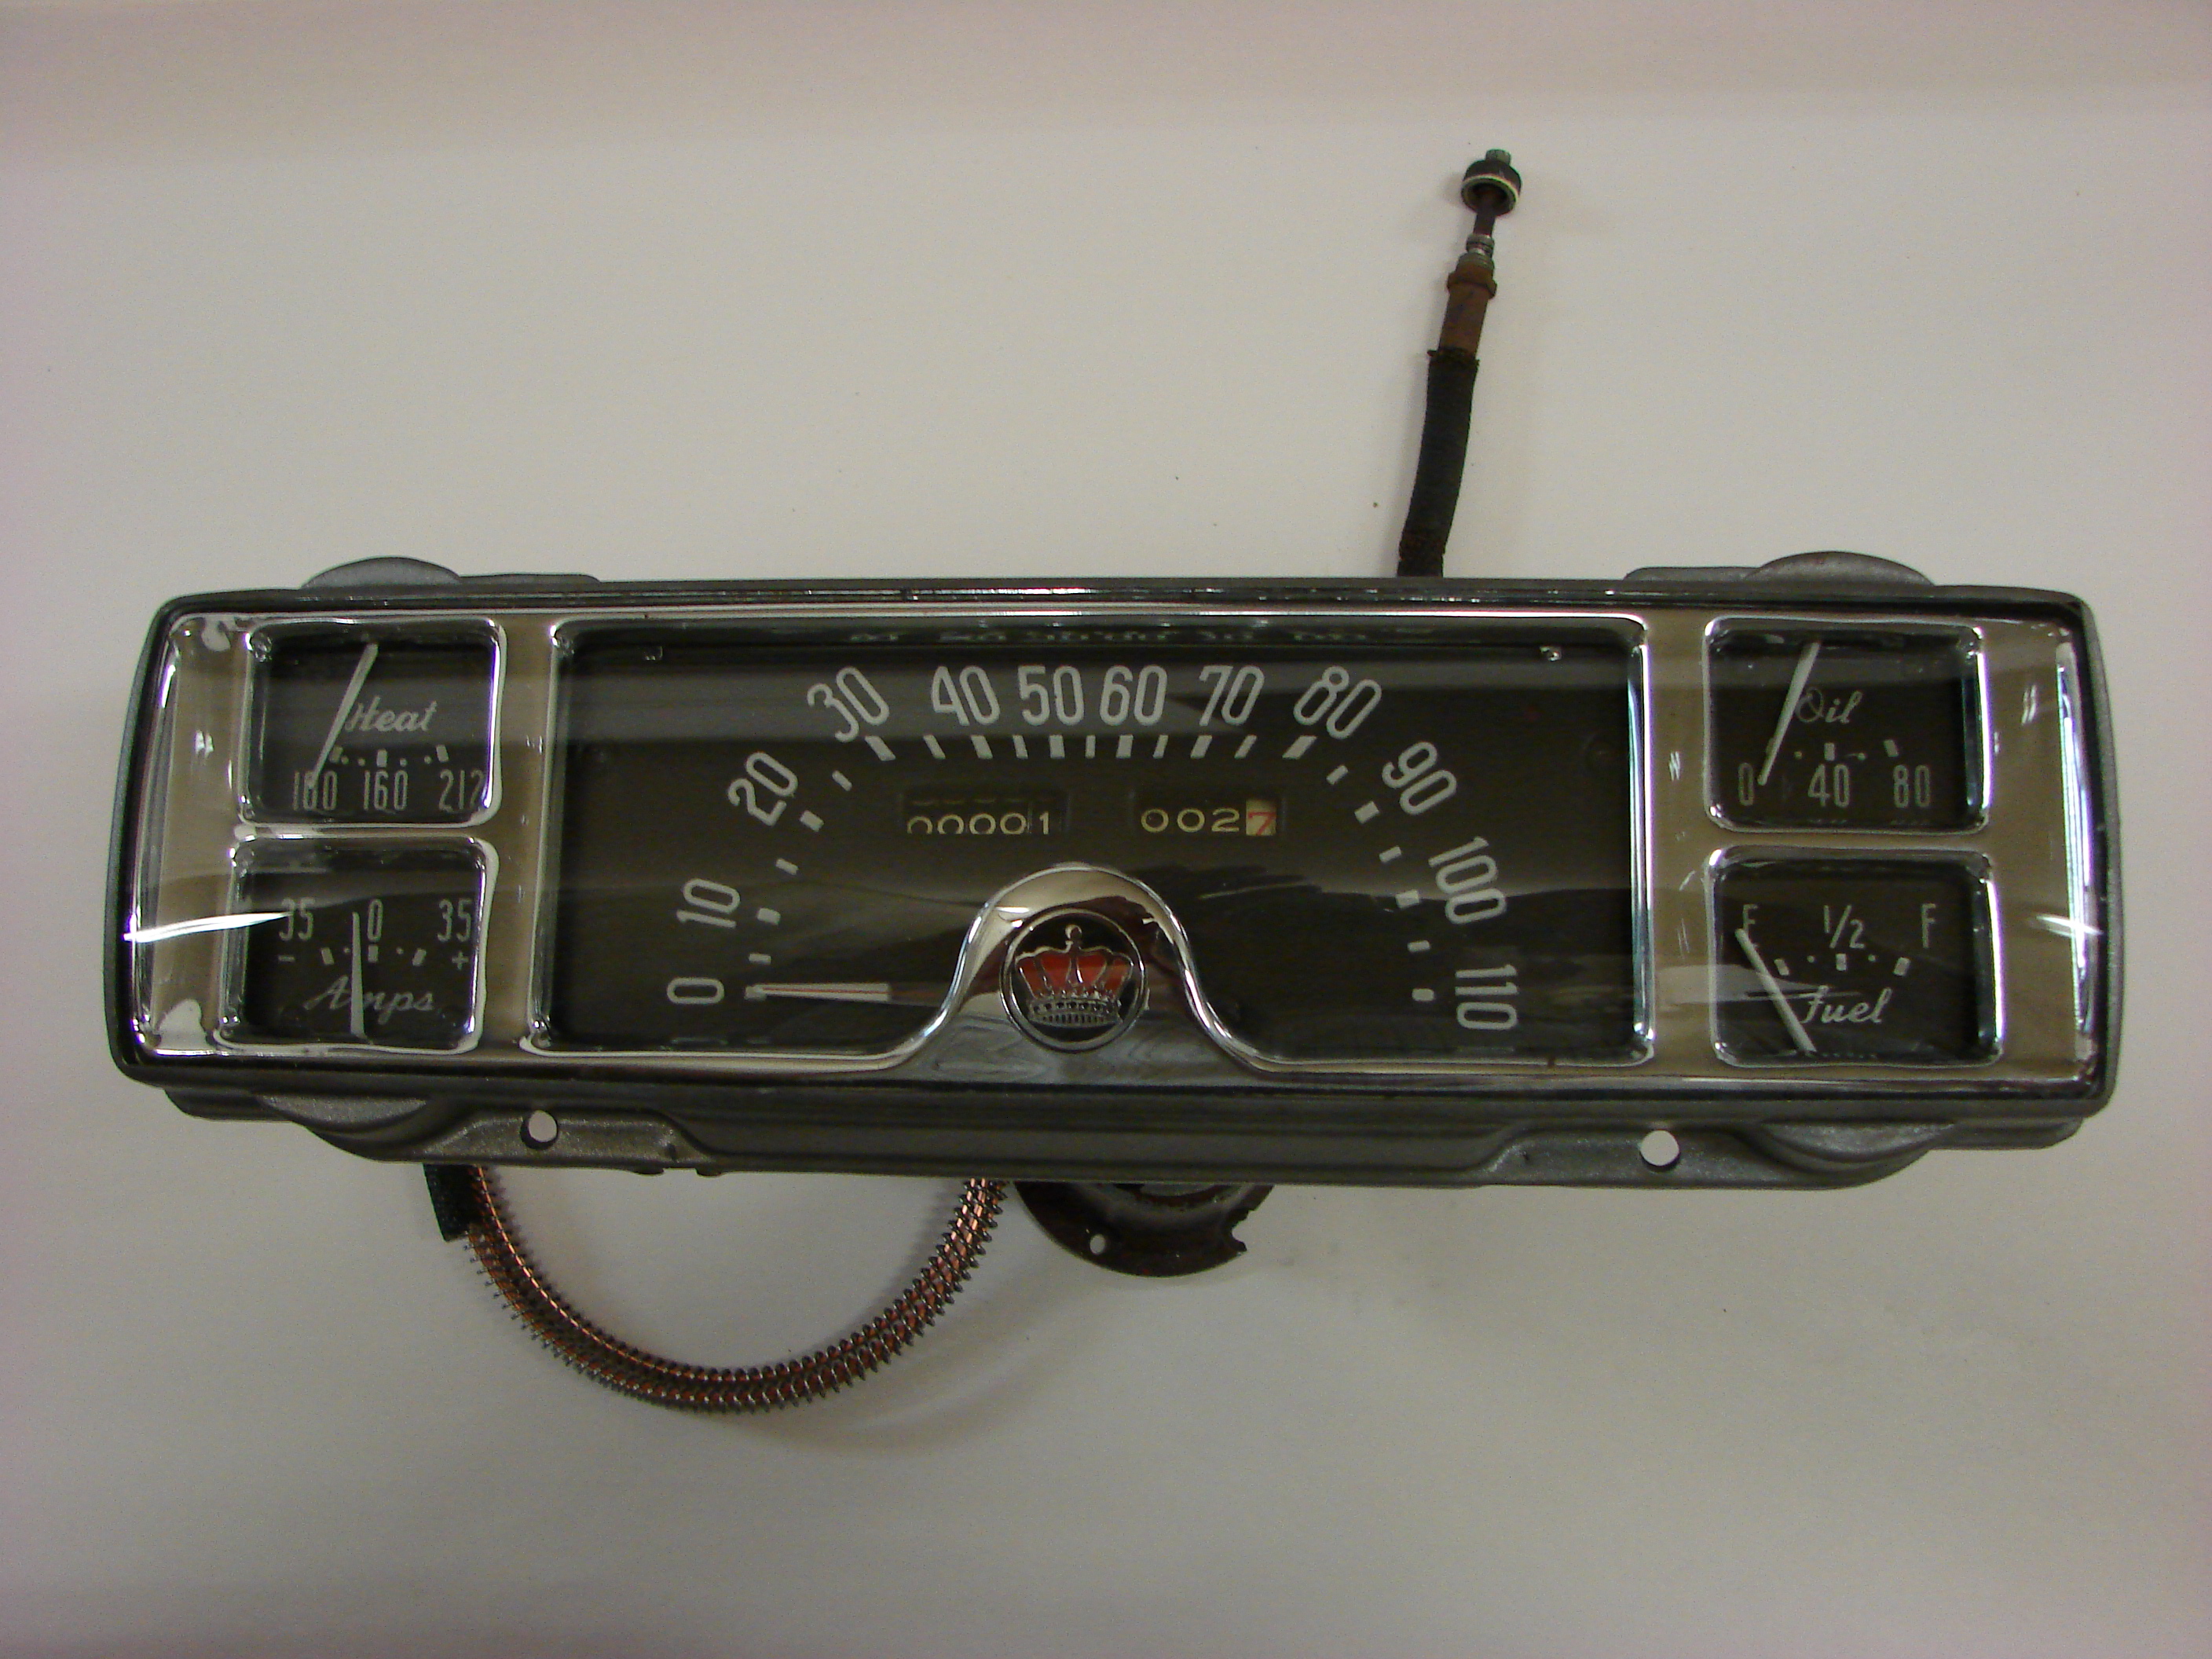 Old rectangular speedometer